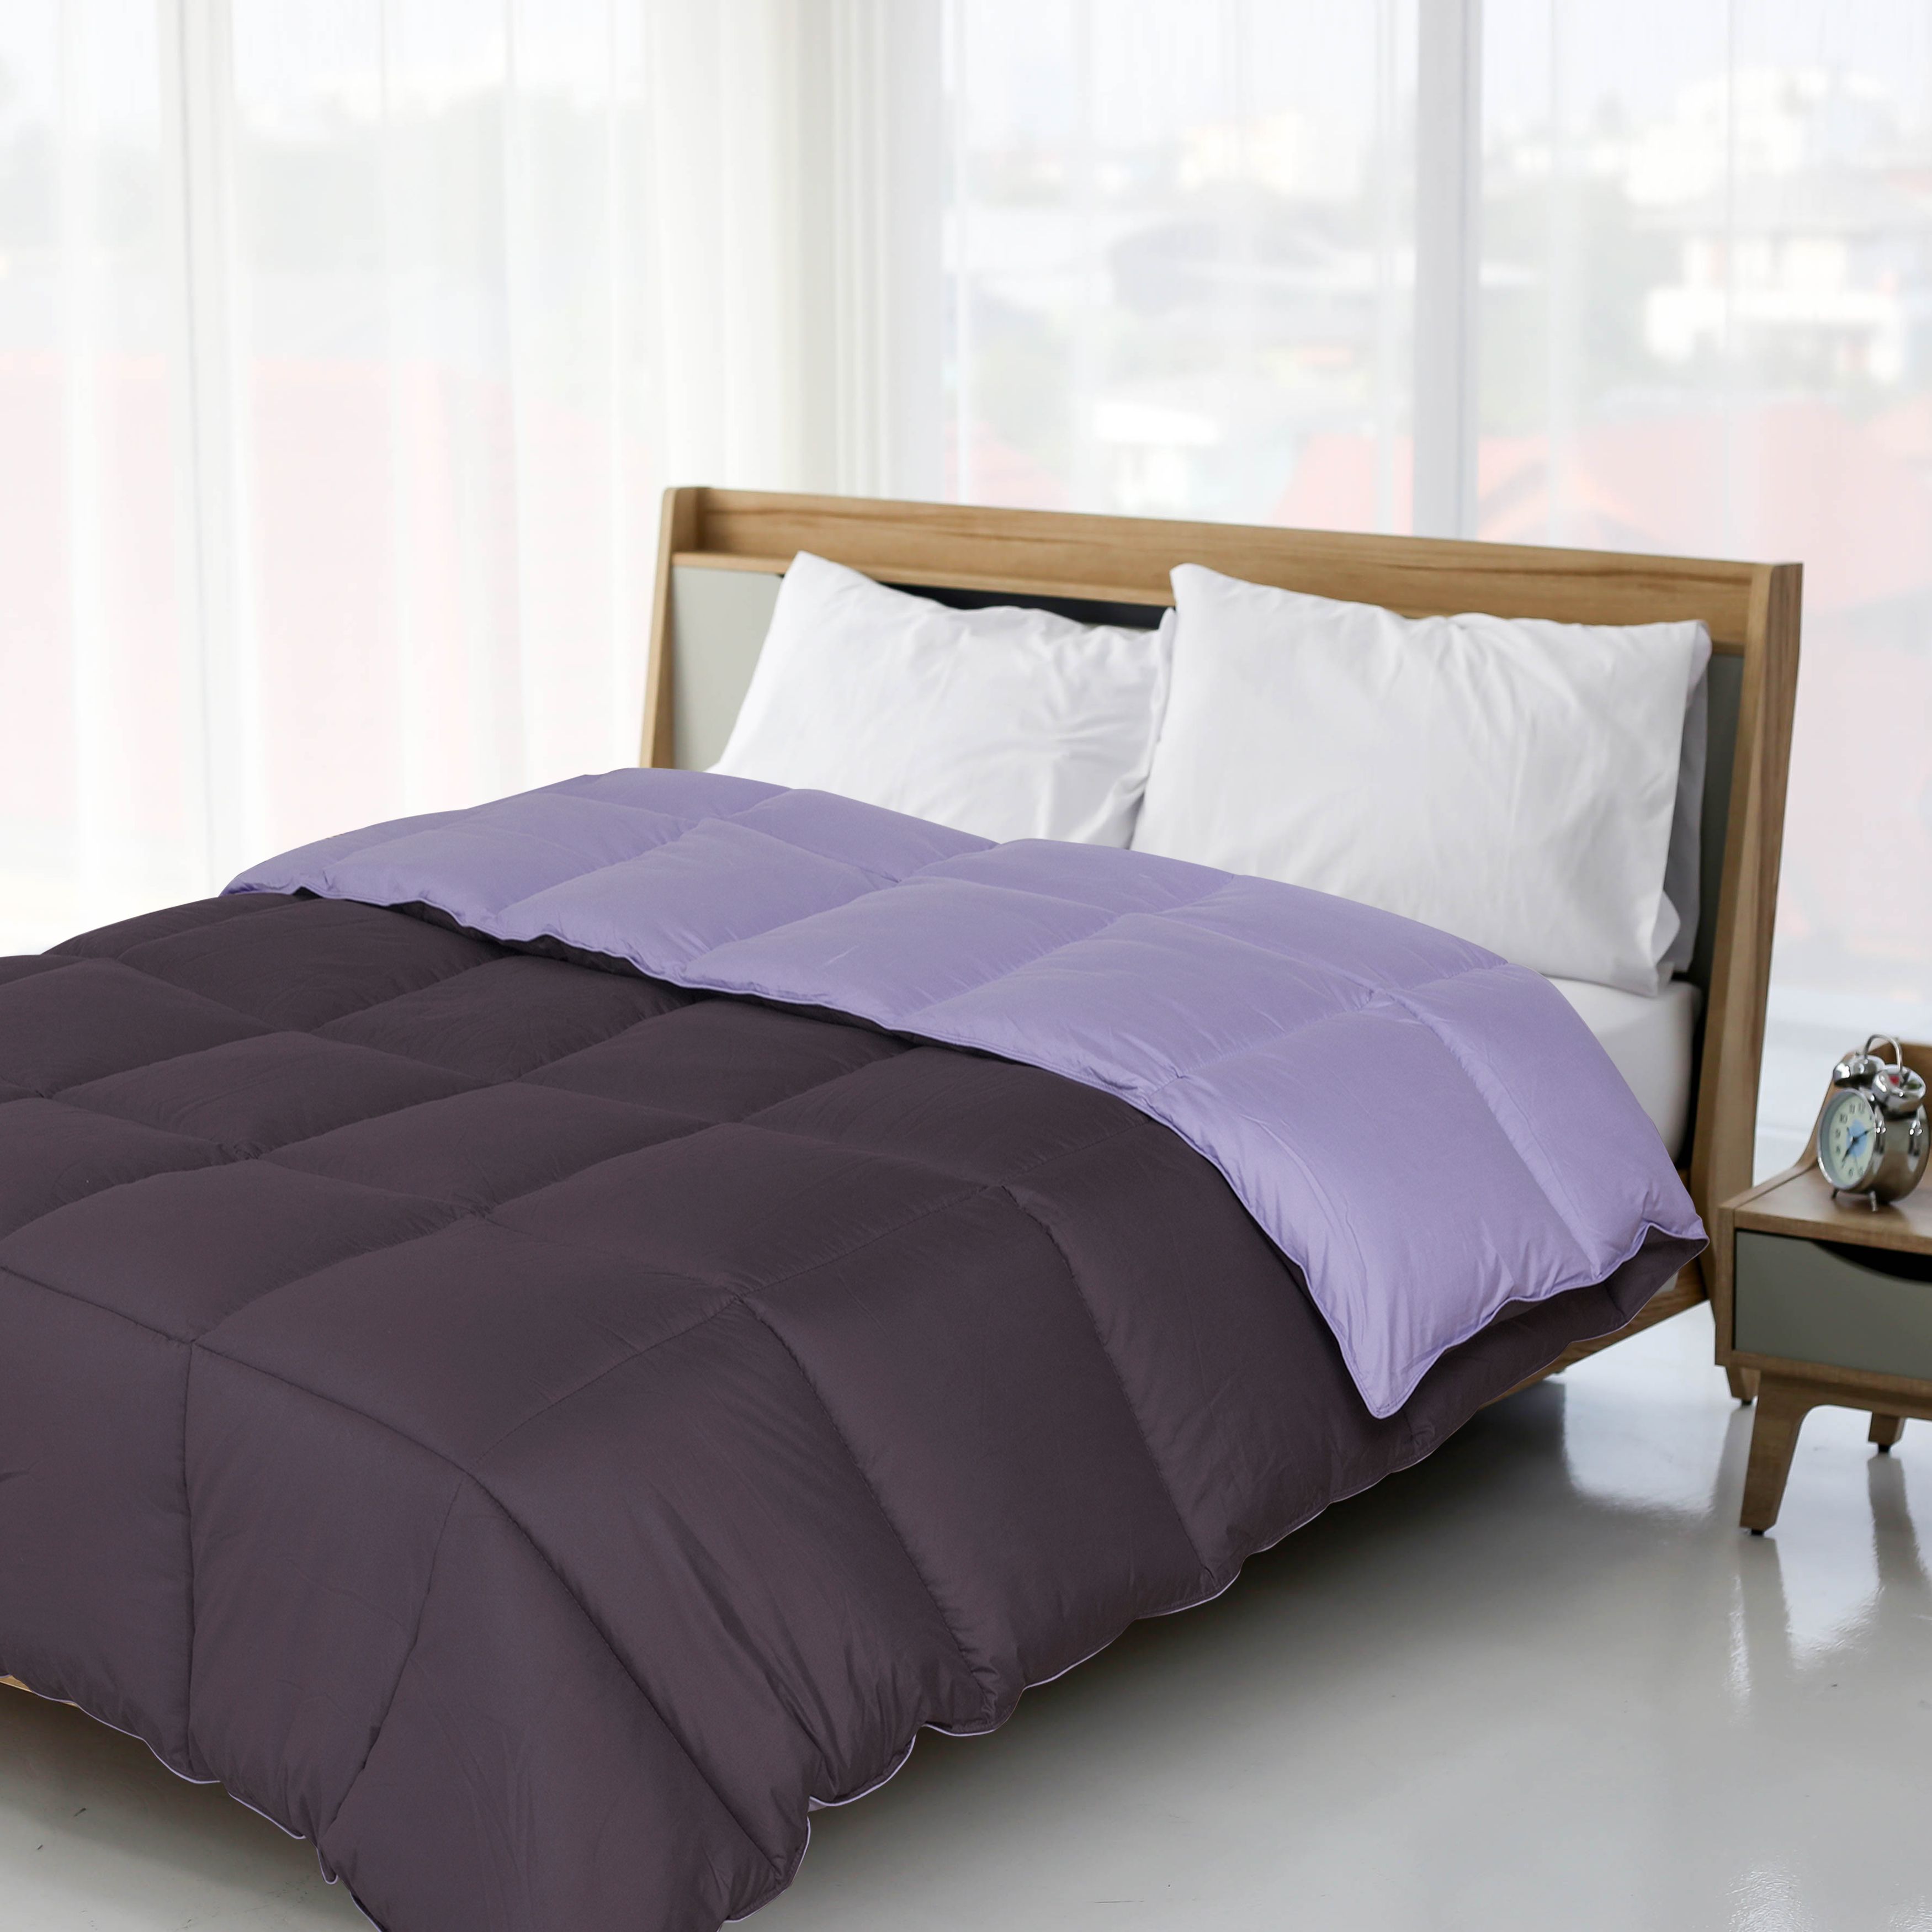 Superior Down Alternative Reversible Comforter, King, Plum/ Lilac - image 2 of 4